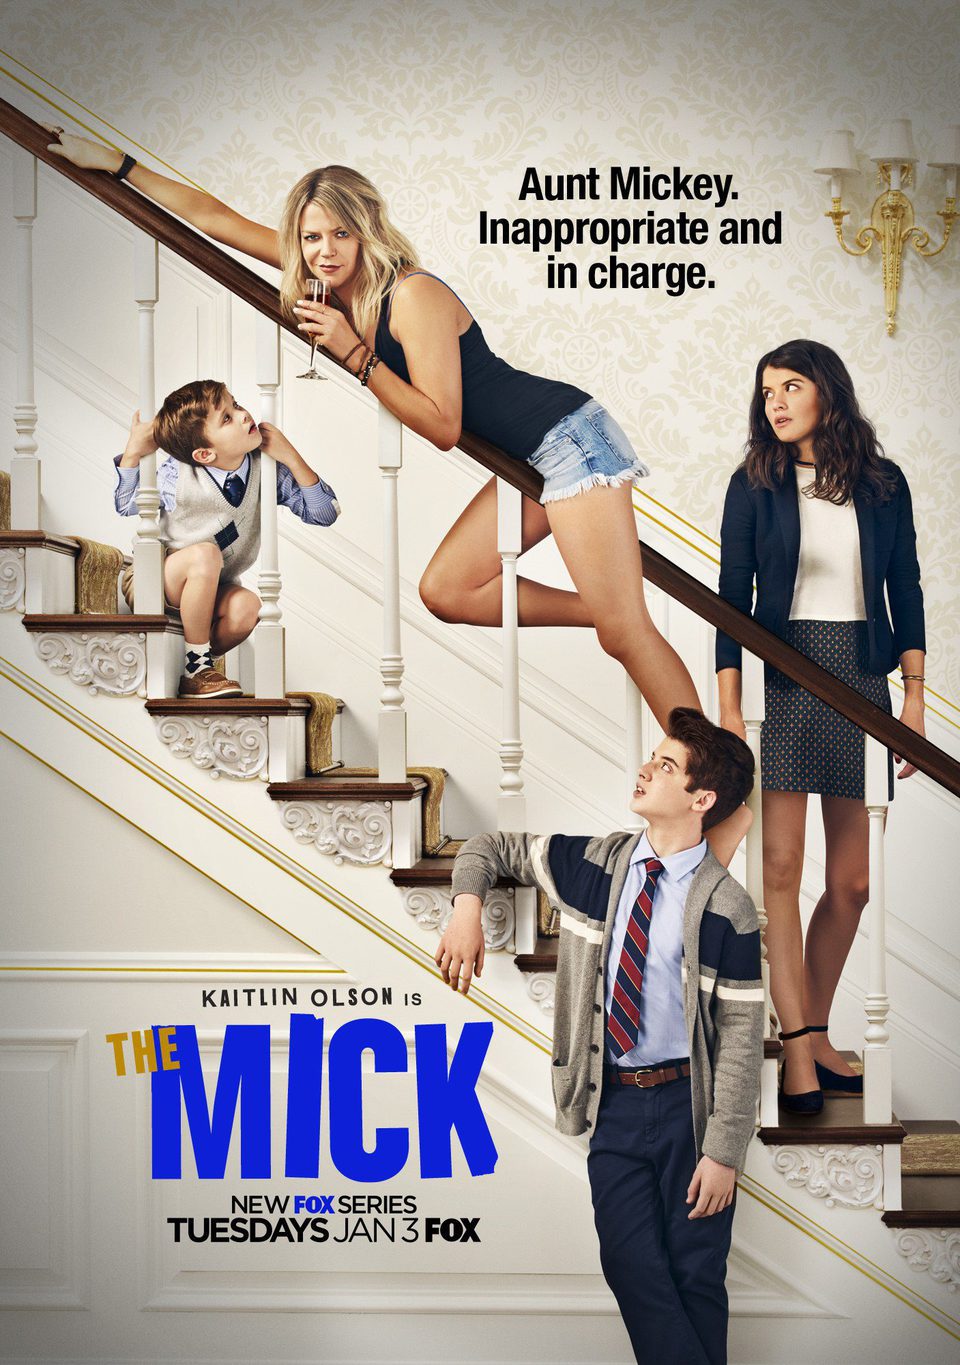 Cartel Temporada 1 de 'The Mick'